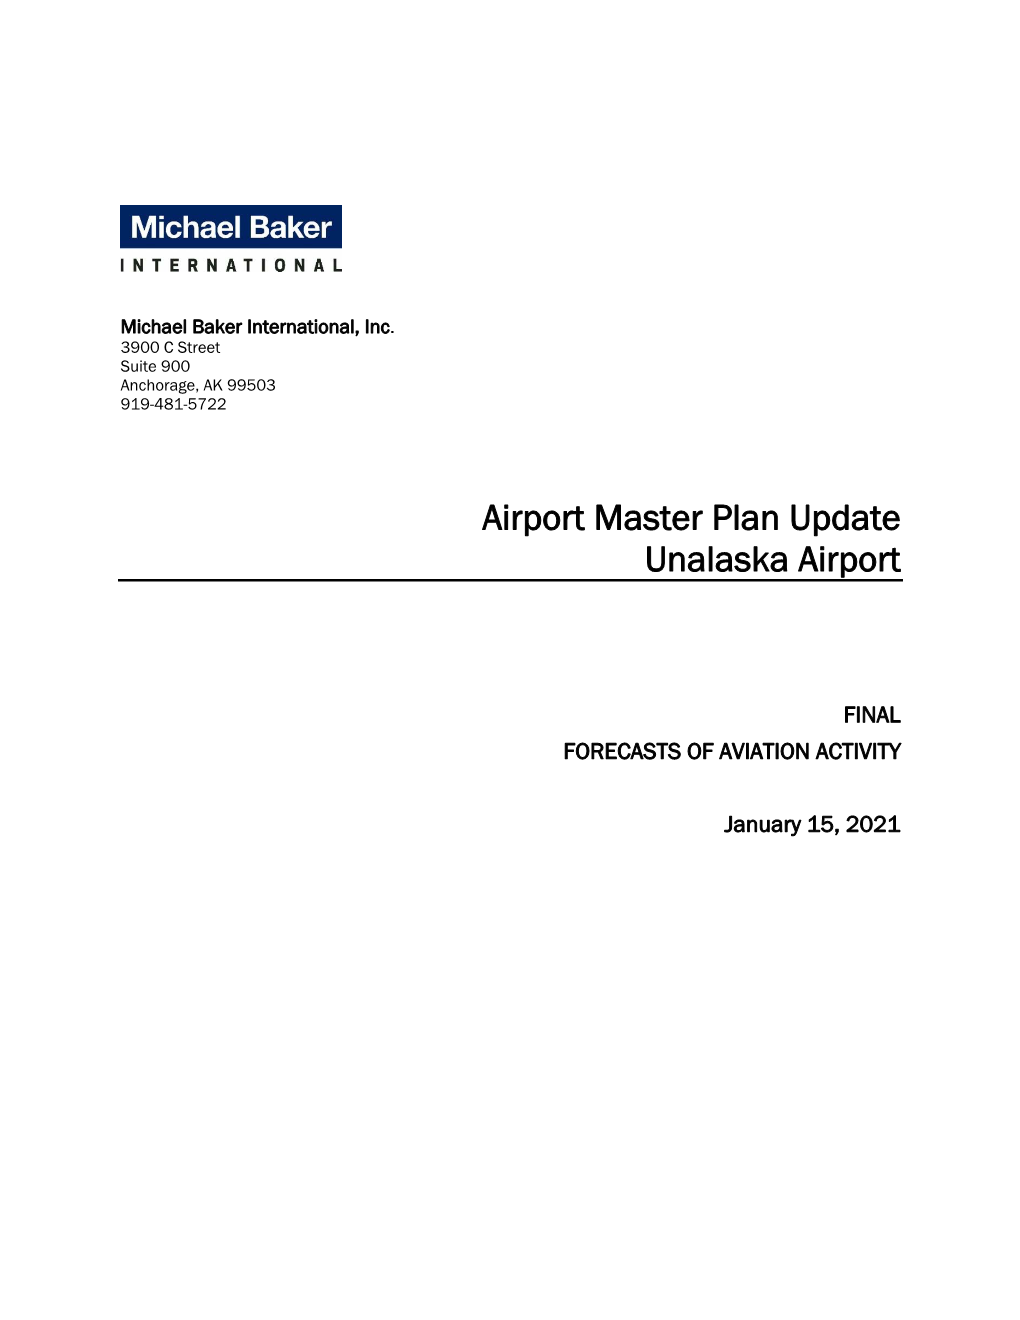 Airport Master Plan Update Unalaska Airport